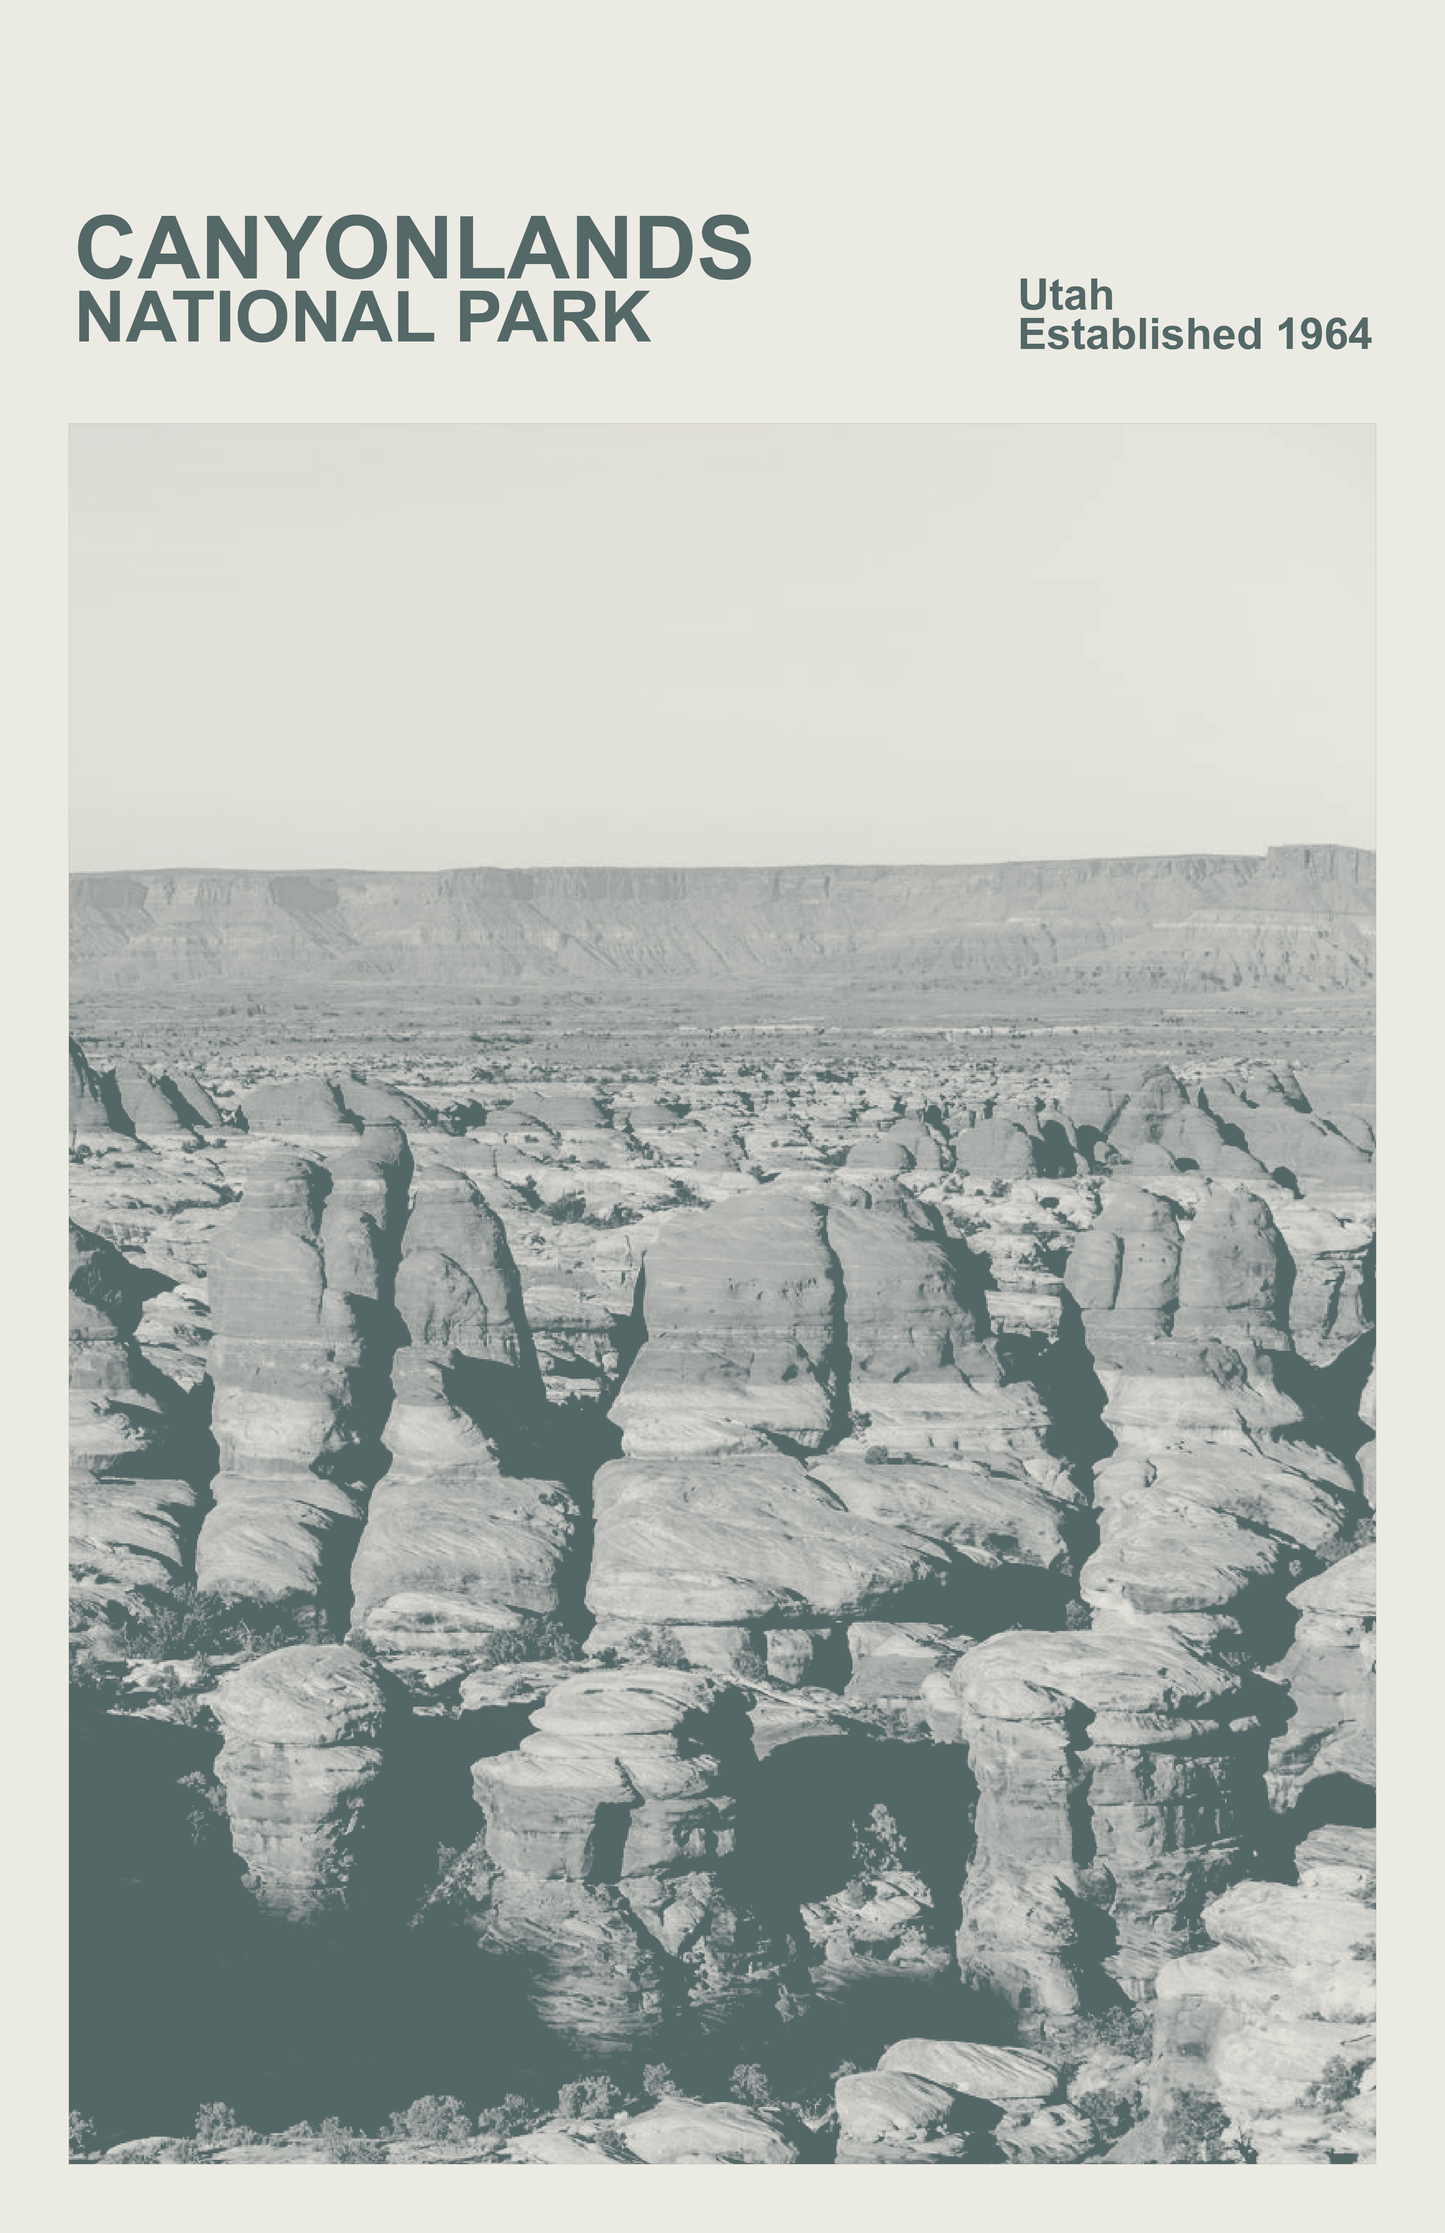 Canyonlands Lake National Park Poster, Print, Monochrome